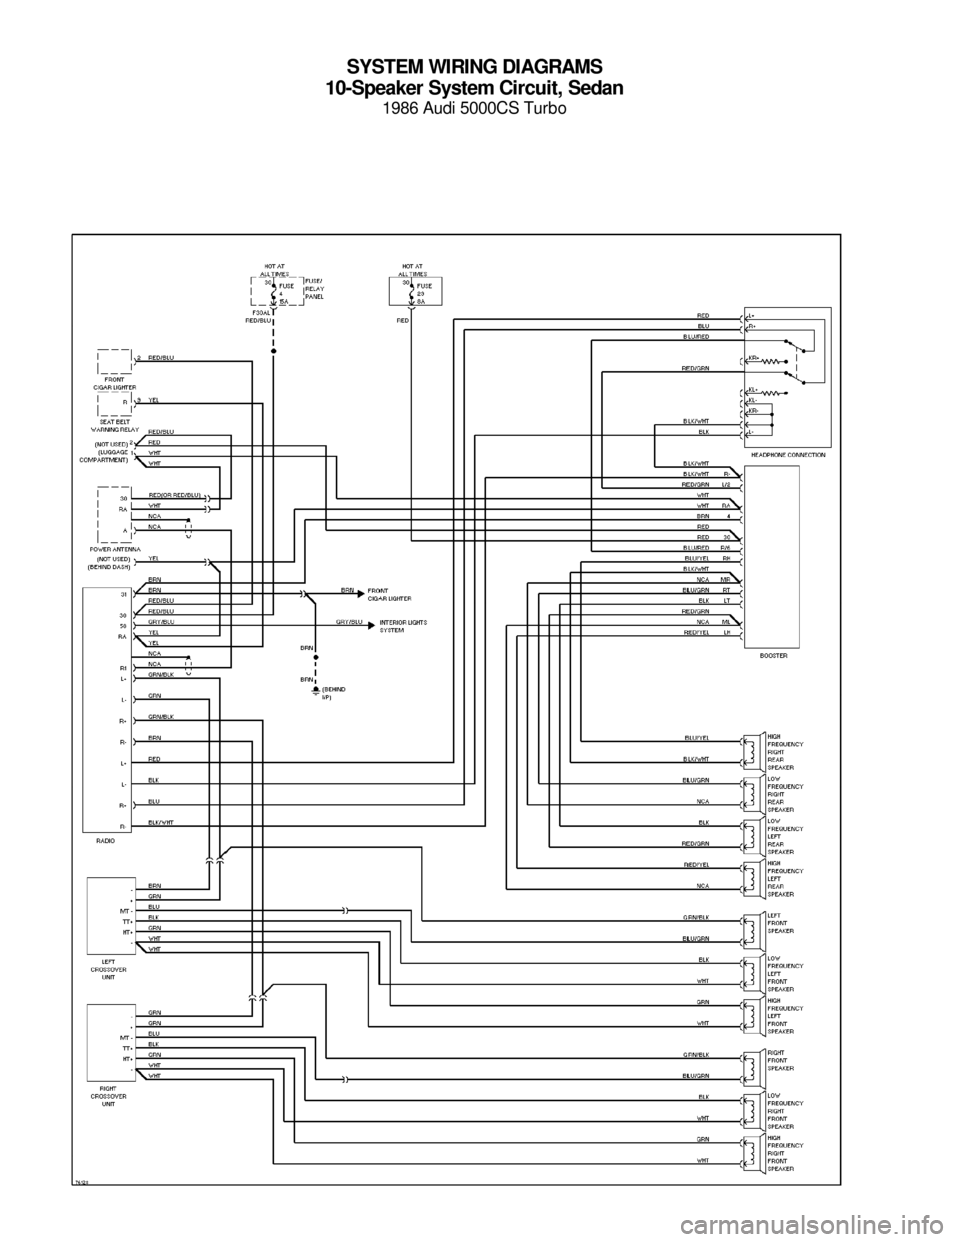 AUDI 5000CS 1986 C2 System Wiring Diagram SYSTEM WIRING DIAGRAMS
10-Speaker System Circuit, Sedan
1986 Audi 5000CS Turbo
For x    
Copyright © 1998 Mitchell Repair Information Company, LLCMonday, July 19, 2004  05:53PM 